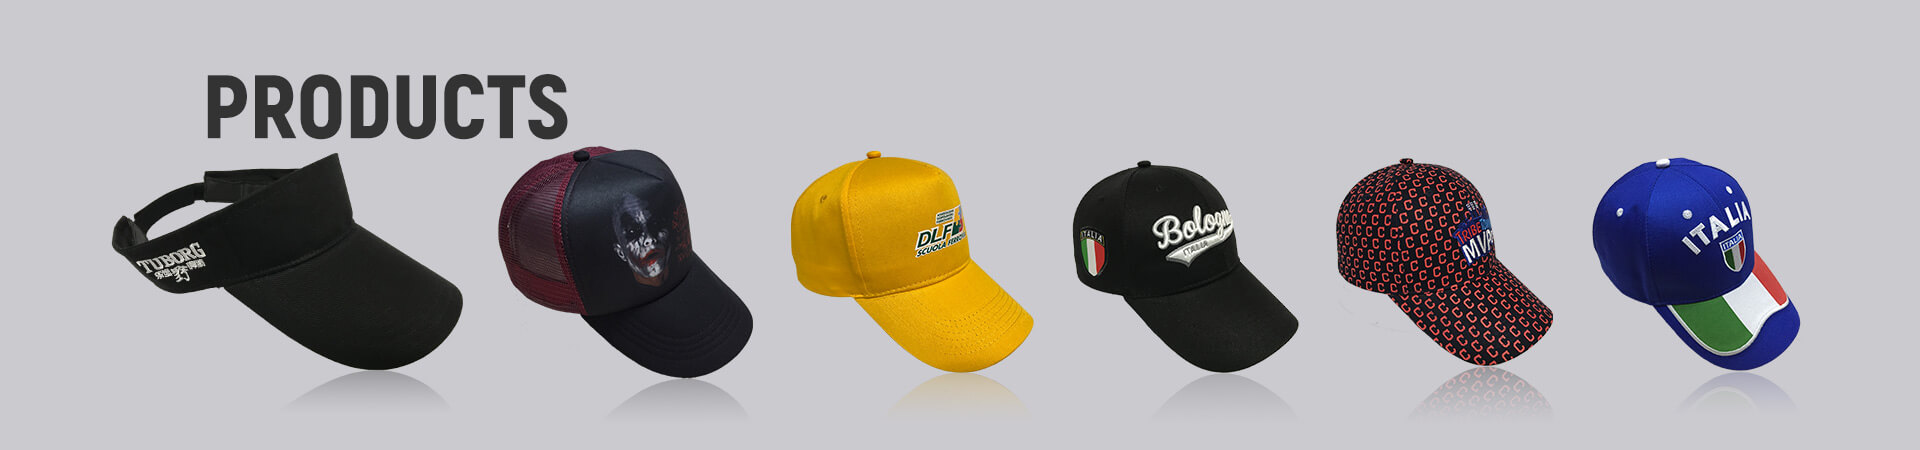 Embroidered Hat Archives - Baseball Cap,Sports Cap,Golf Cap,Bucket Hat,Fisherman Hat,Trucker Hat